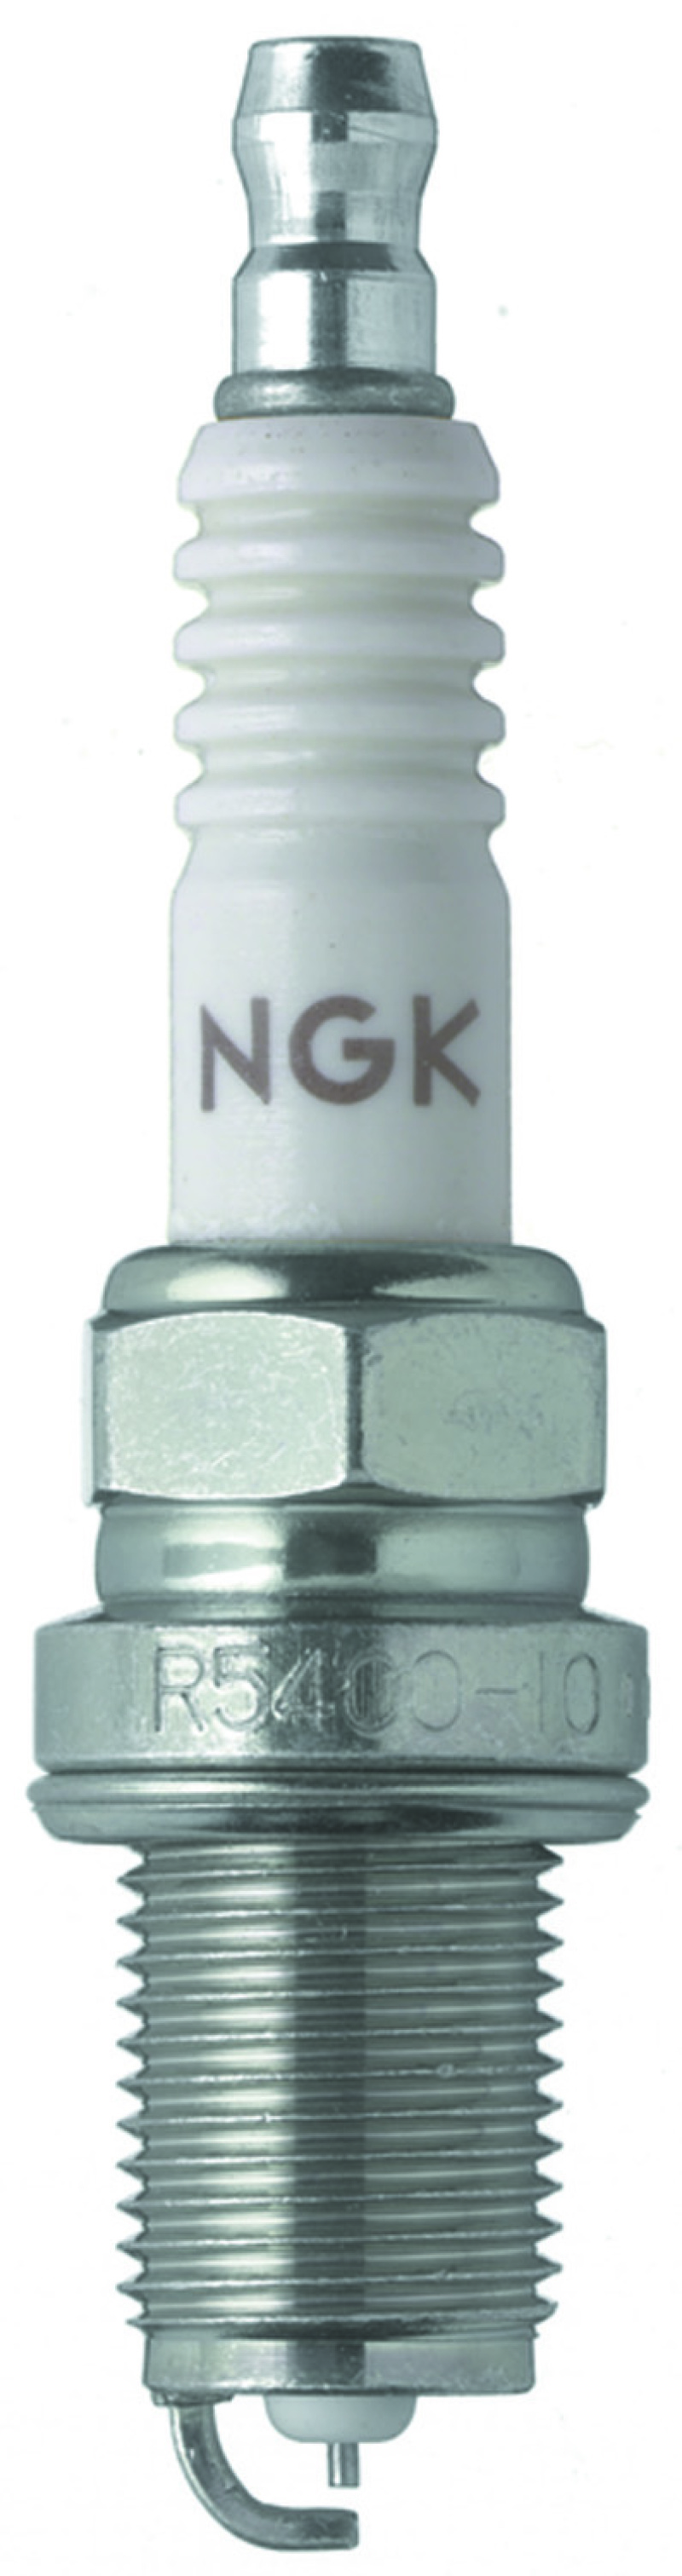 NGK Iridium Racing Spark Plug Box of 4 (R7435-10) - 4897